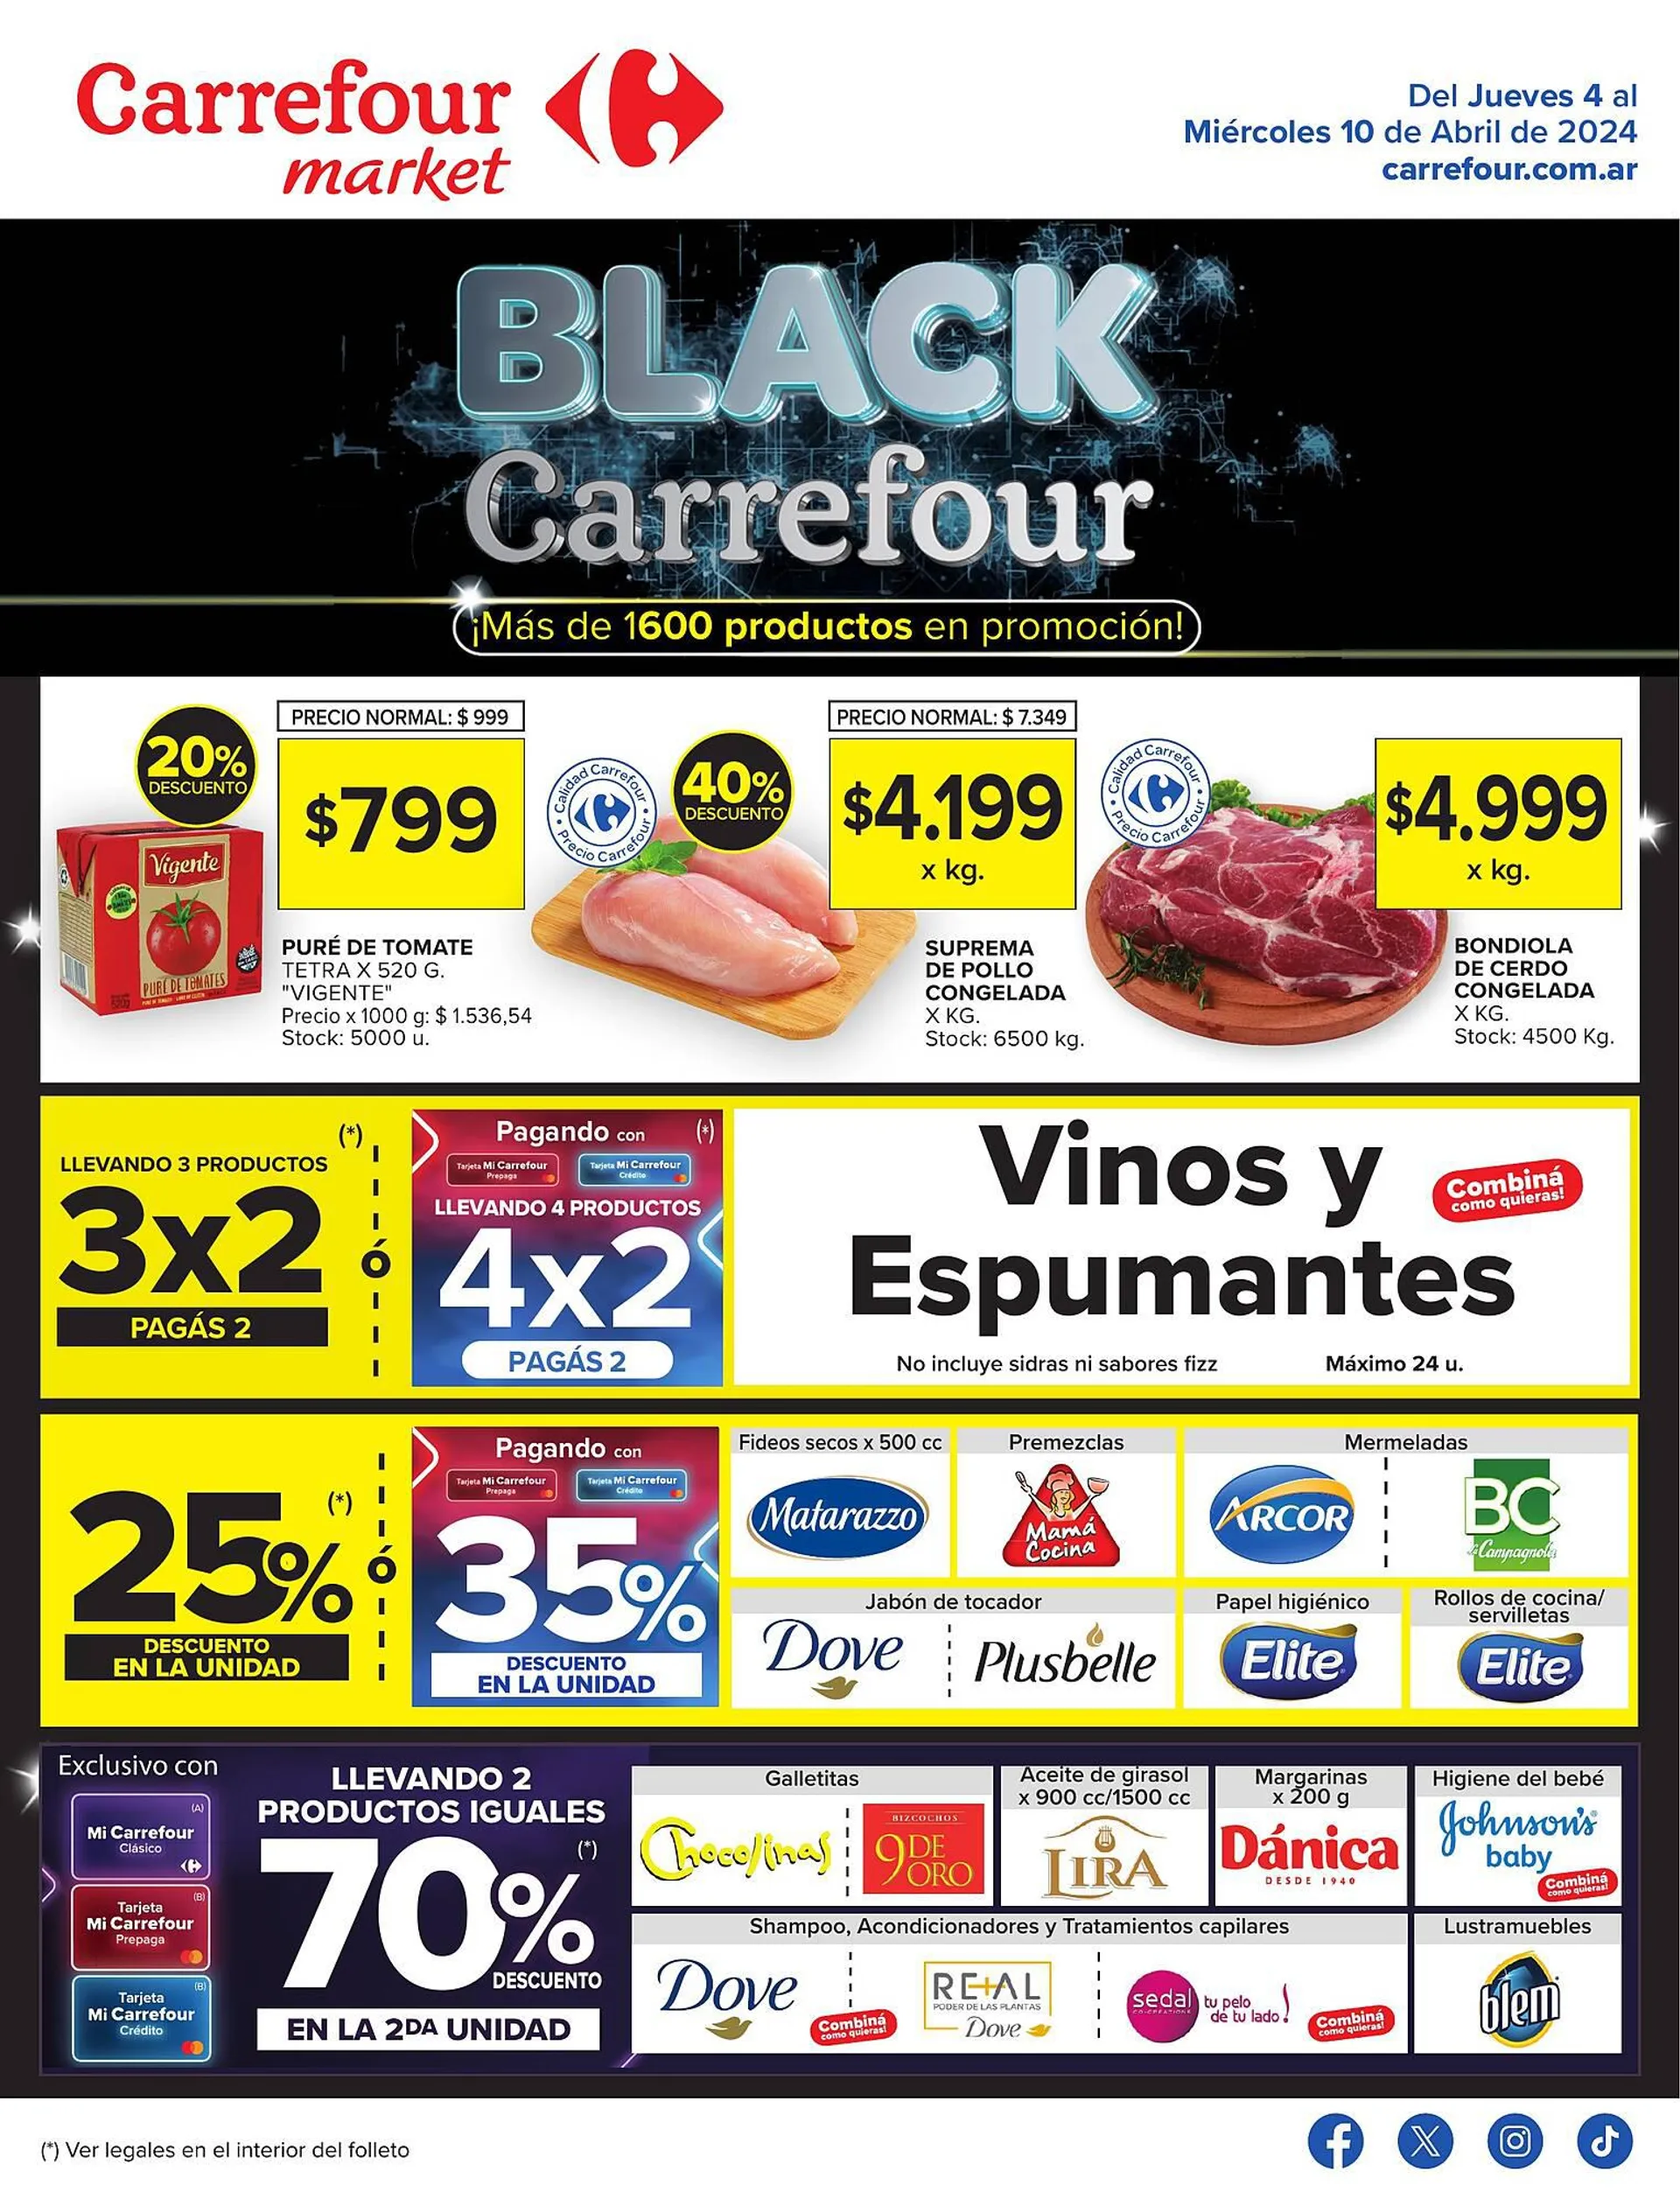 Ofertas de Catálogo Carrefour Market 8 de abril al 10 de abril 2024 - Página 1 del catálogo